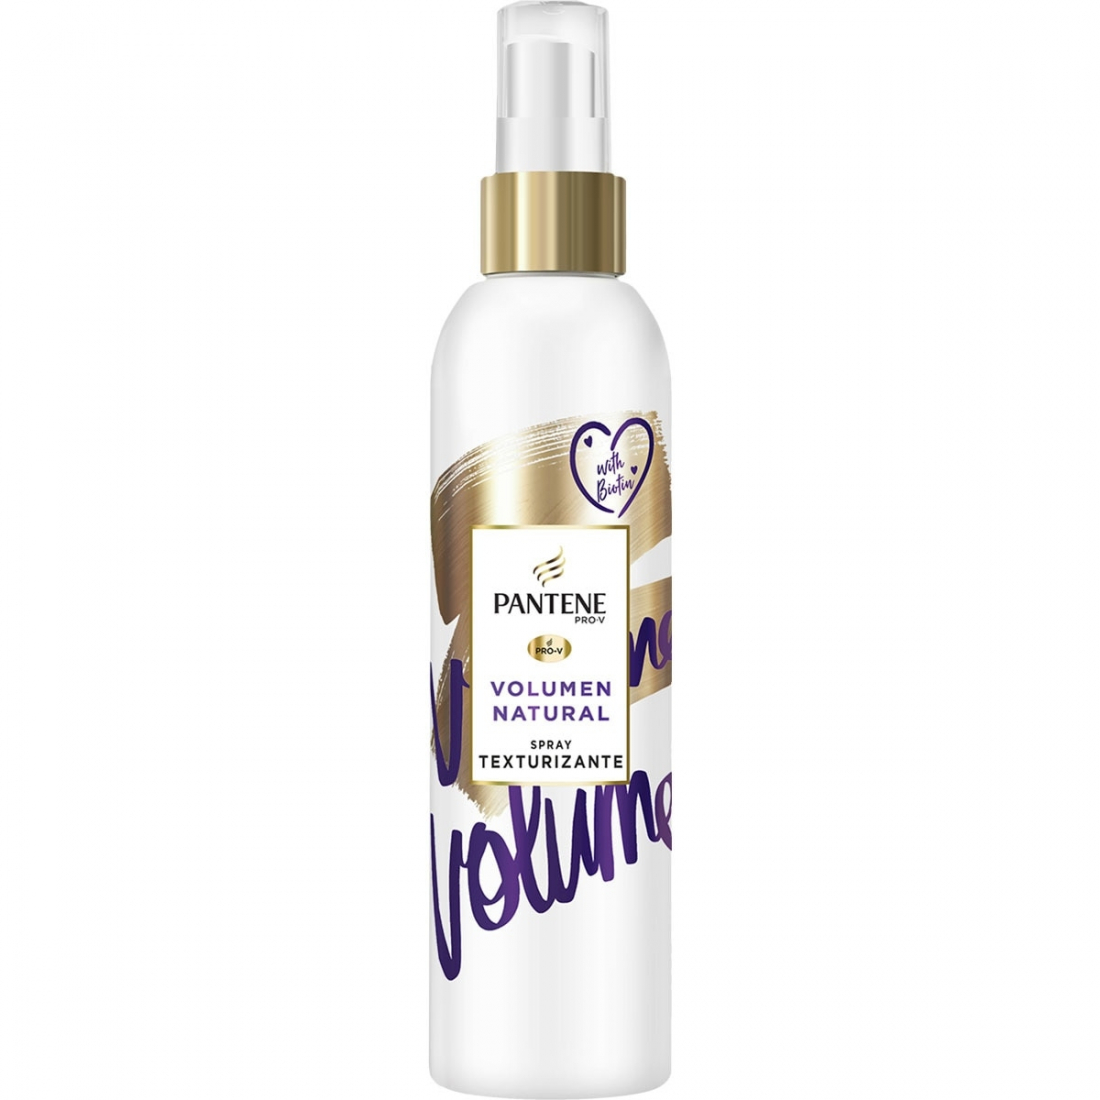 'Pro-V Natural Volume Texturizing' Hairspray - 110 ml